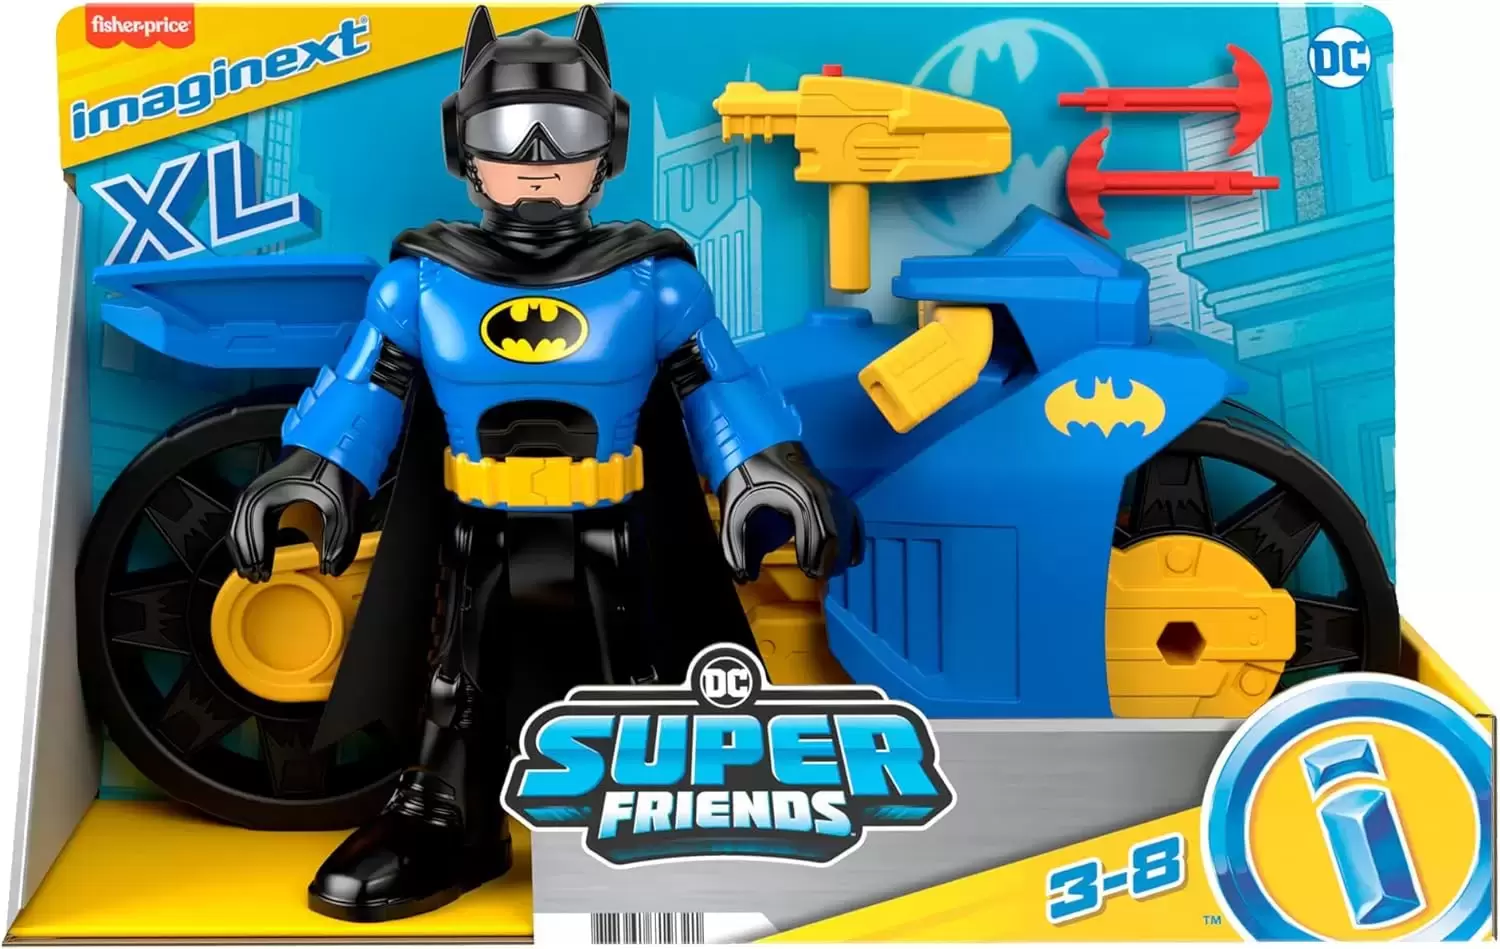 Imaginext XL - DC Super Friends - Batcycle & Batman